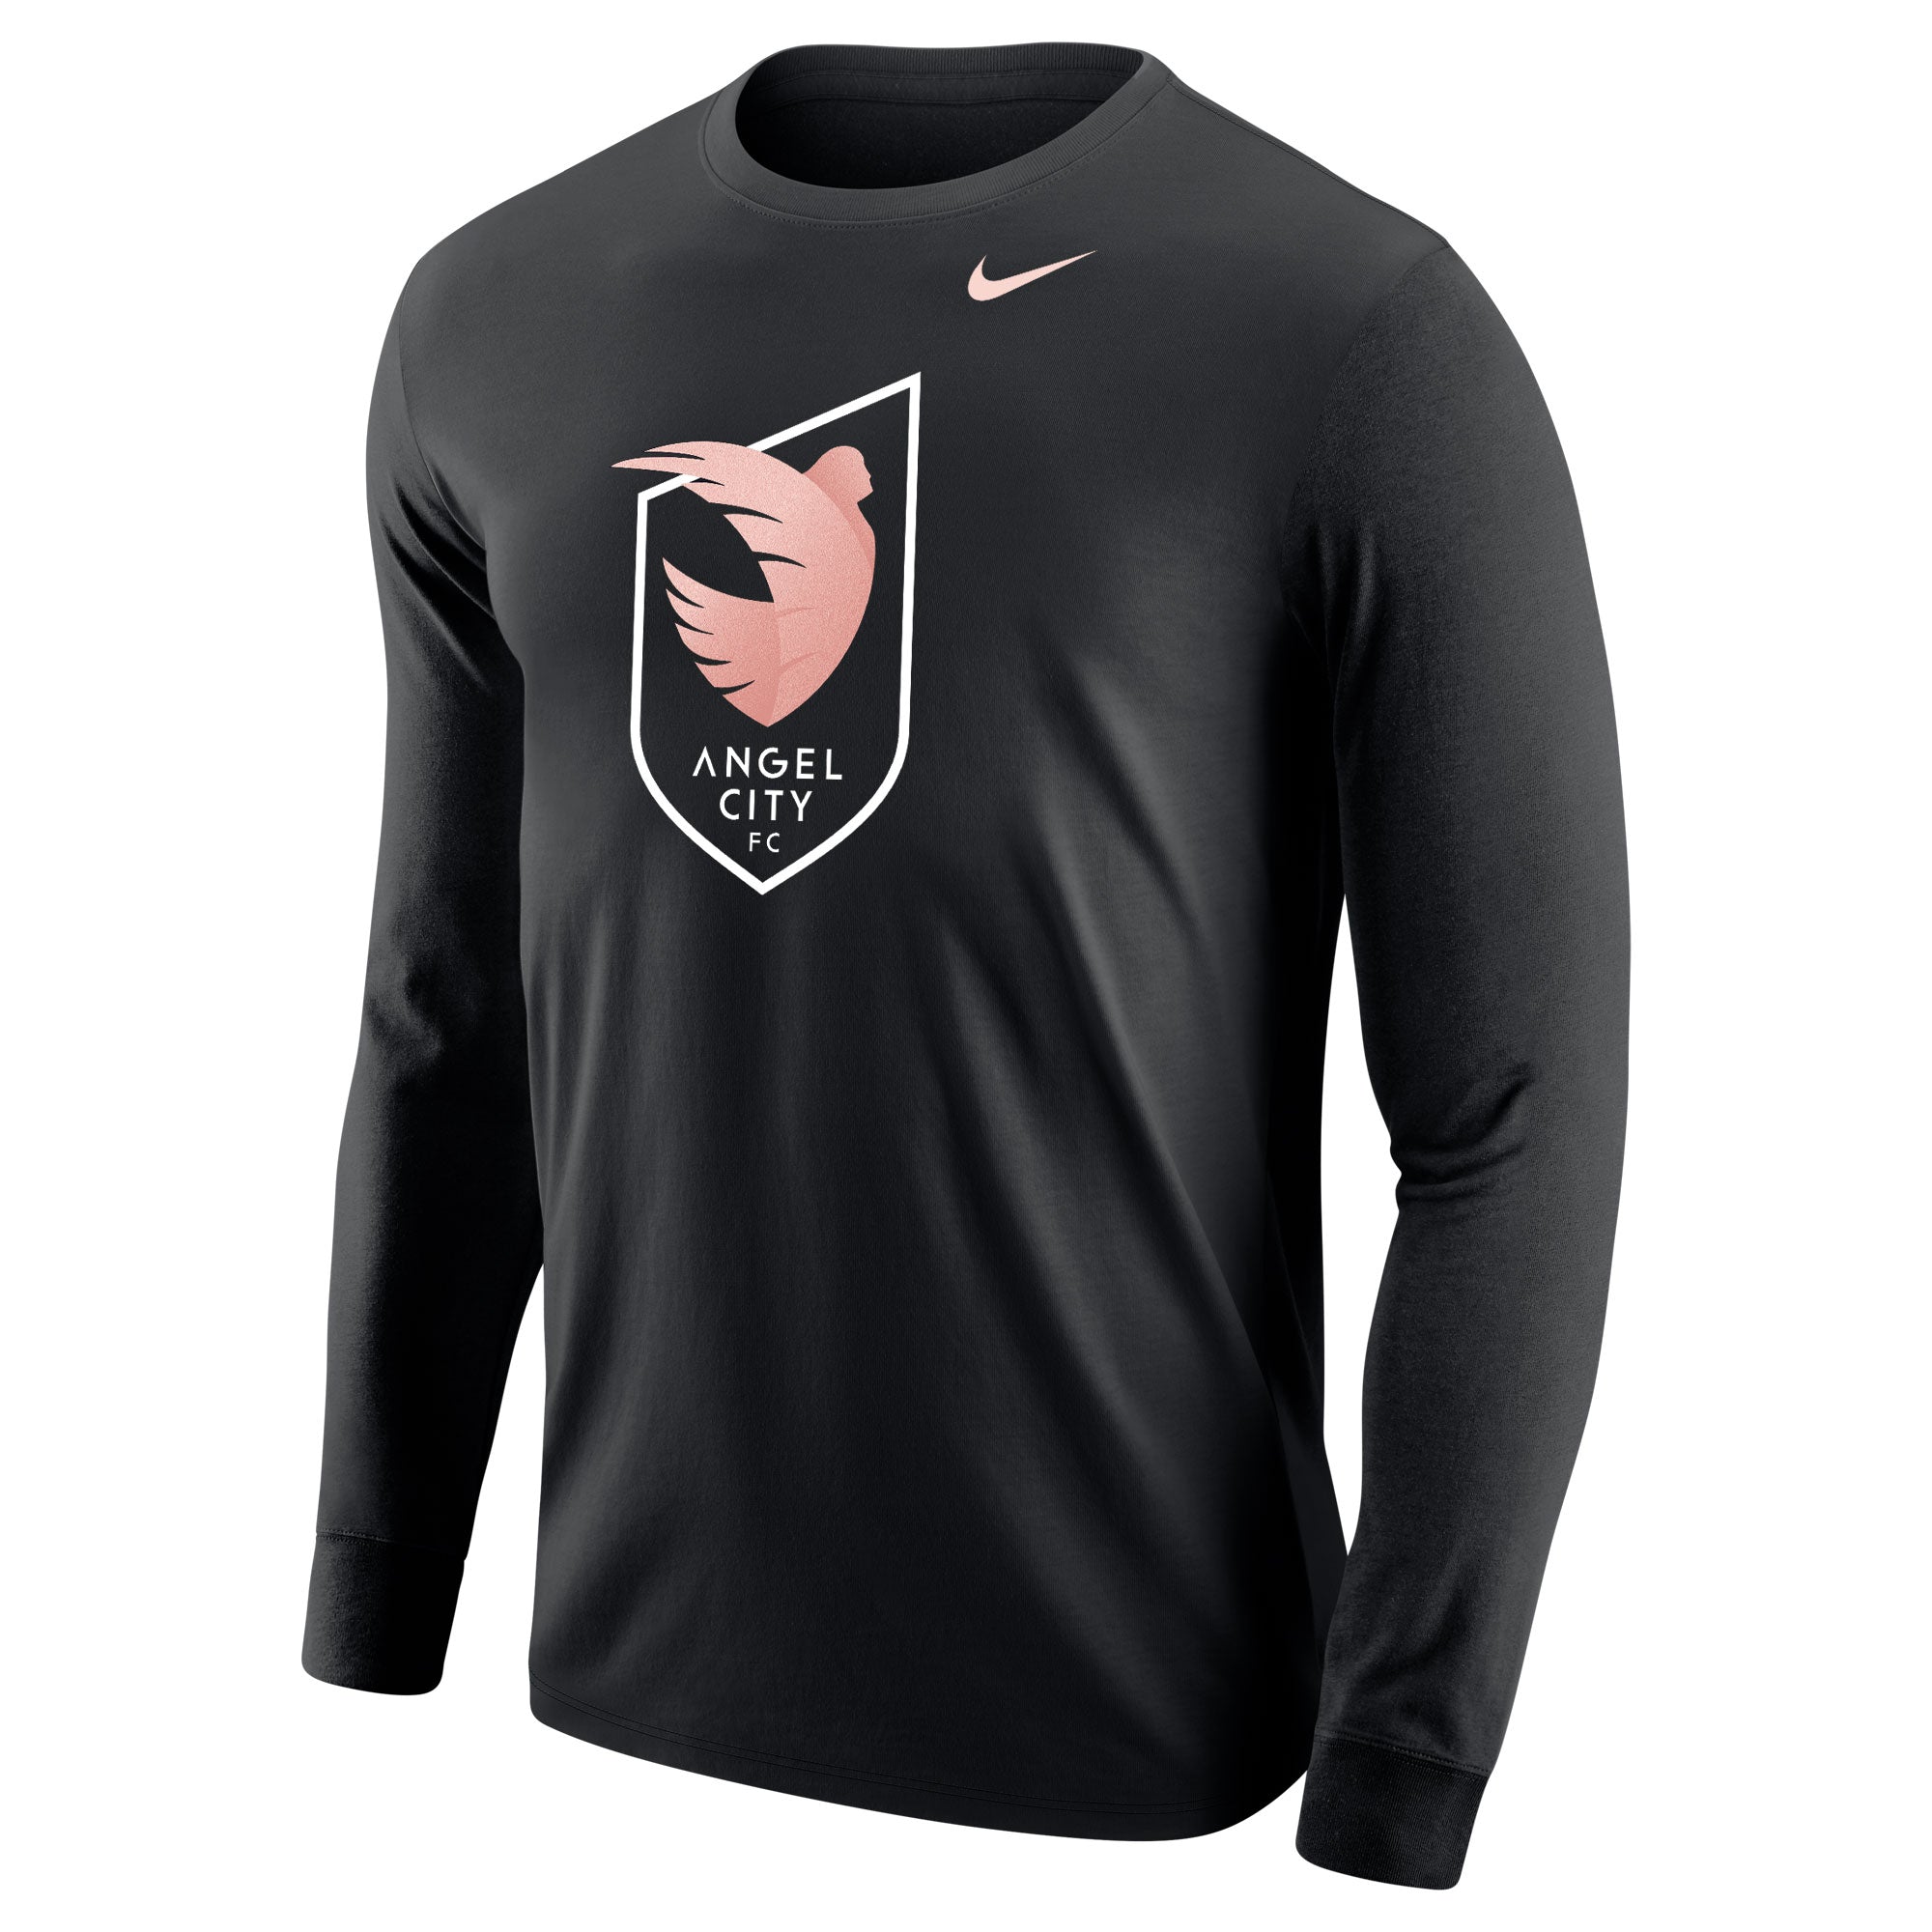 Angel City FC Nike Unisex Sol Rosa Crest camiseta de manga larga negra